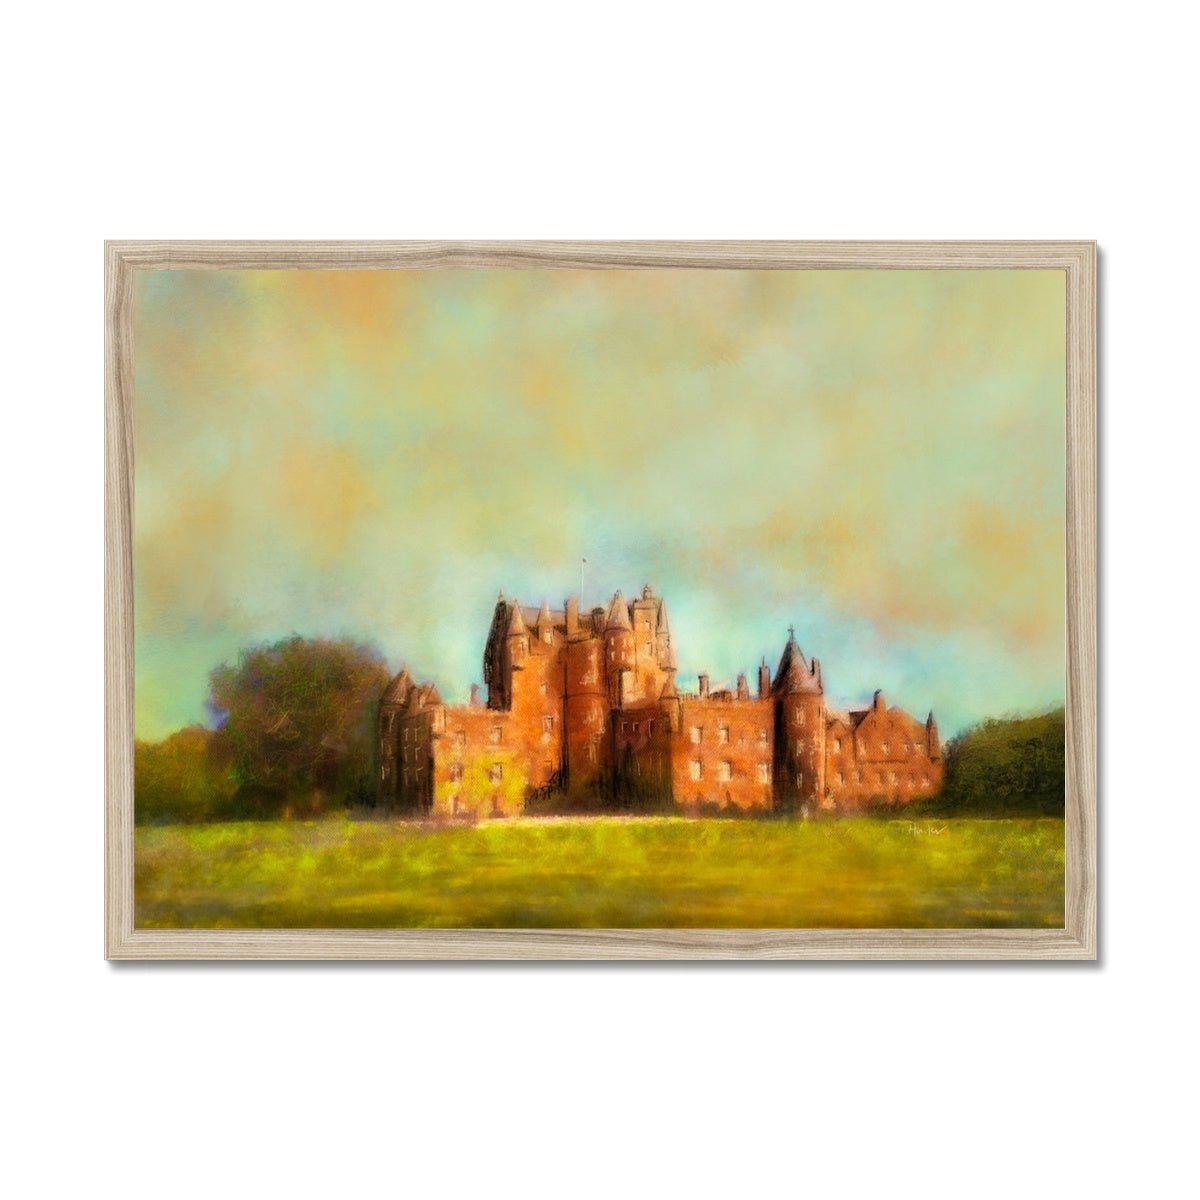 Glamis Castle Painting | Framed Prints From Scotland-Framed Prints-Scottish Castles Art Gallery-A2 Landscape-Natural Frame-Paintings, Prints, Homeware, Art Gifts From Scotland By Scottish Artist Kevin Hunter